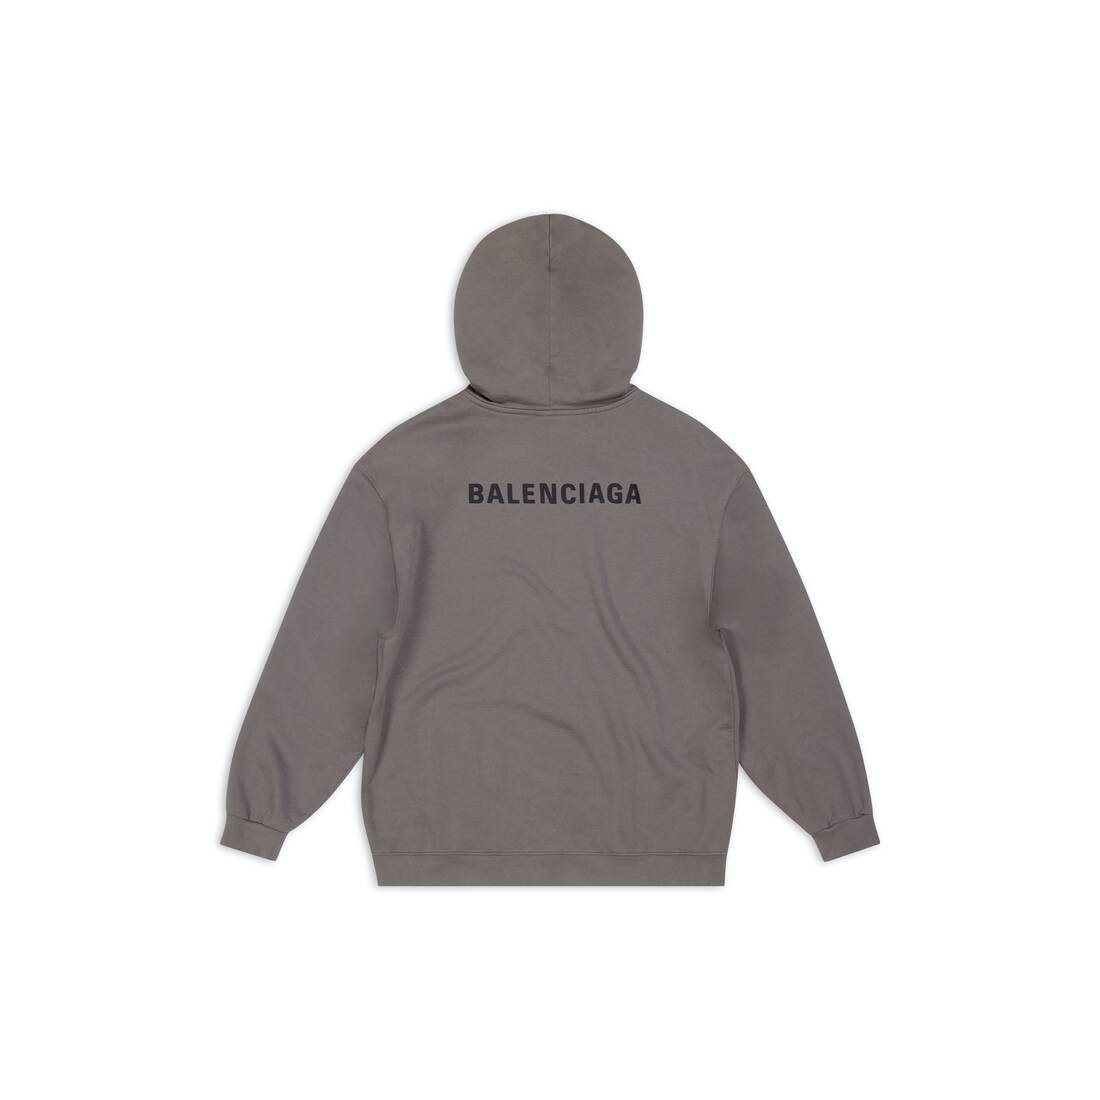 Balenciaga hoodieSサイズ